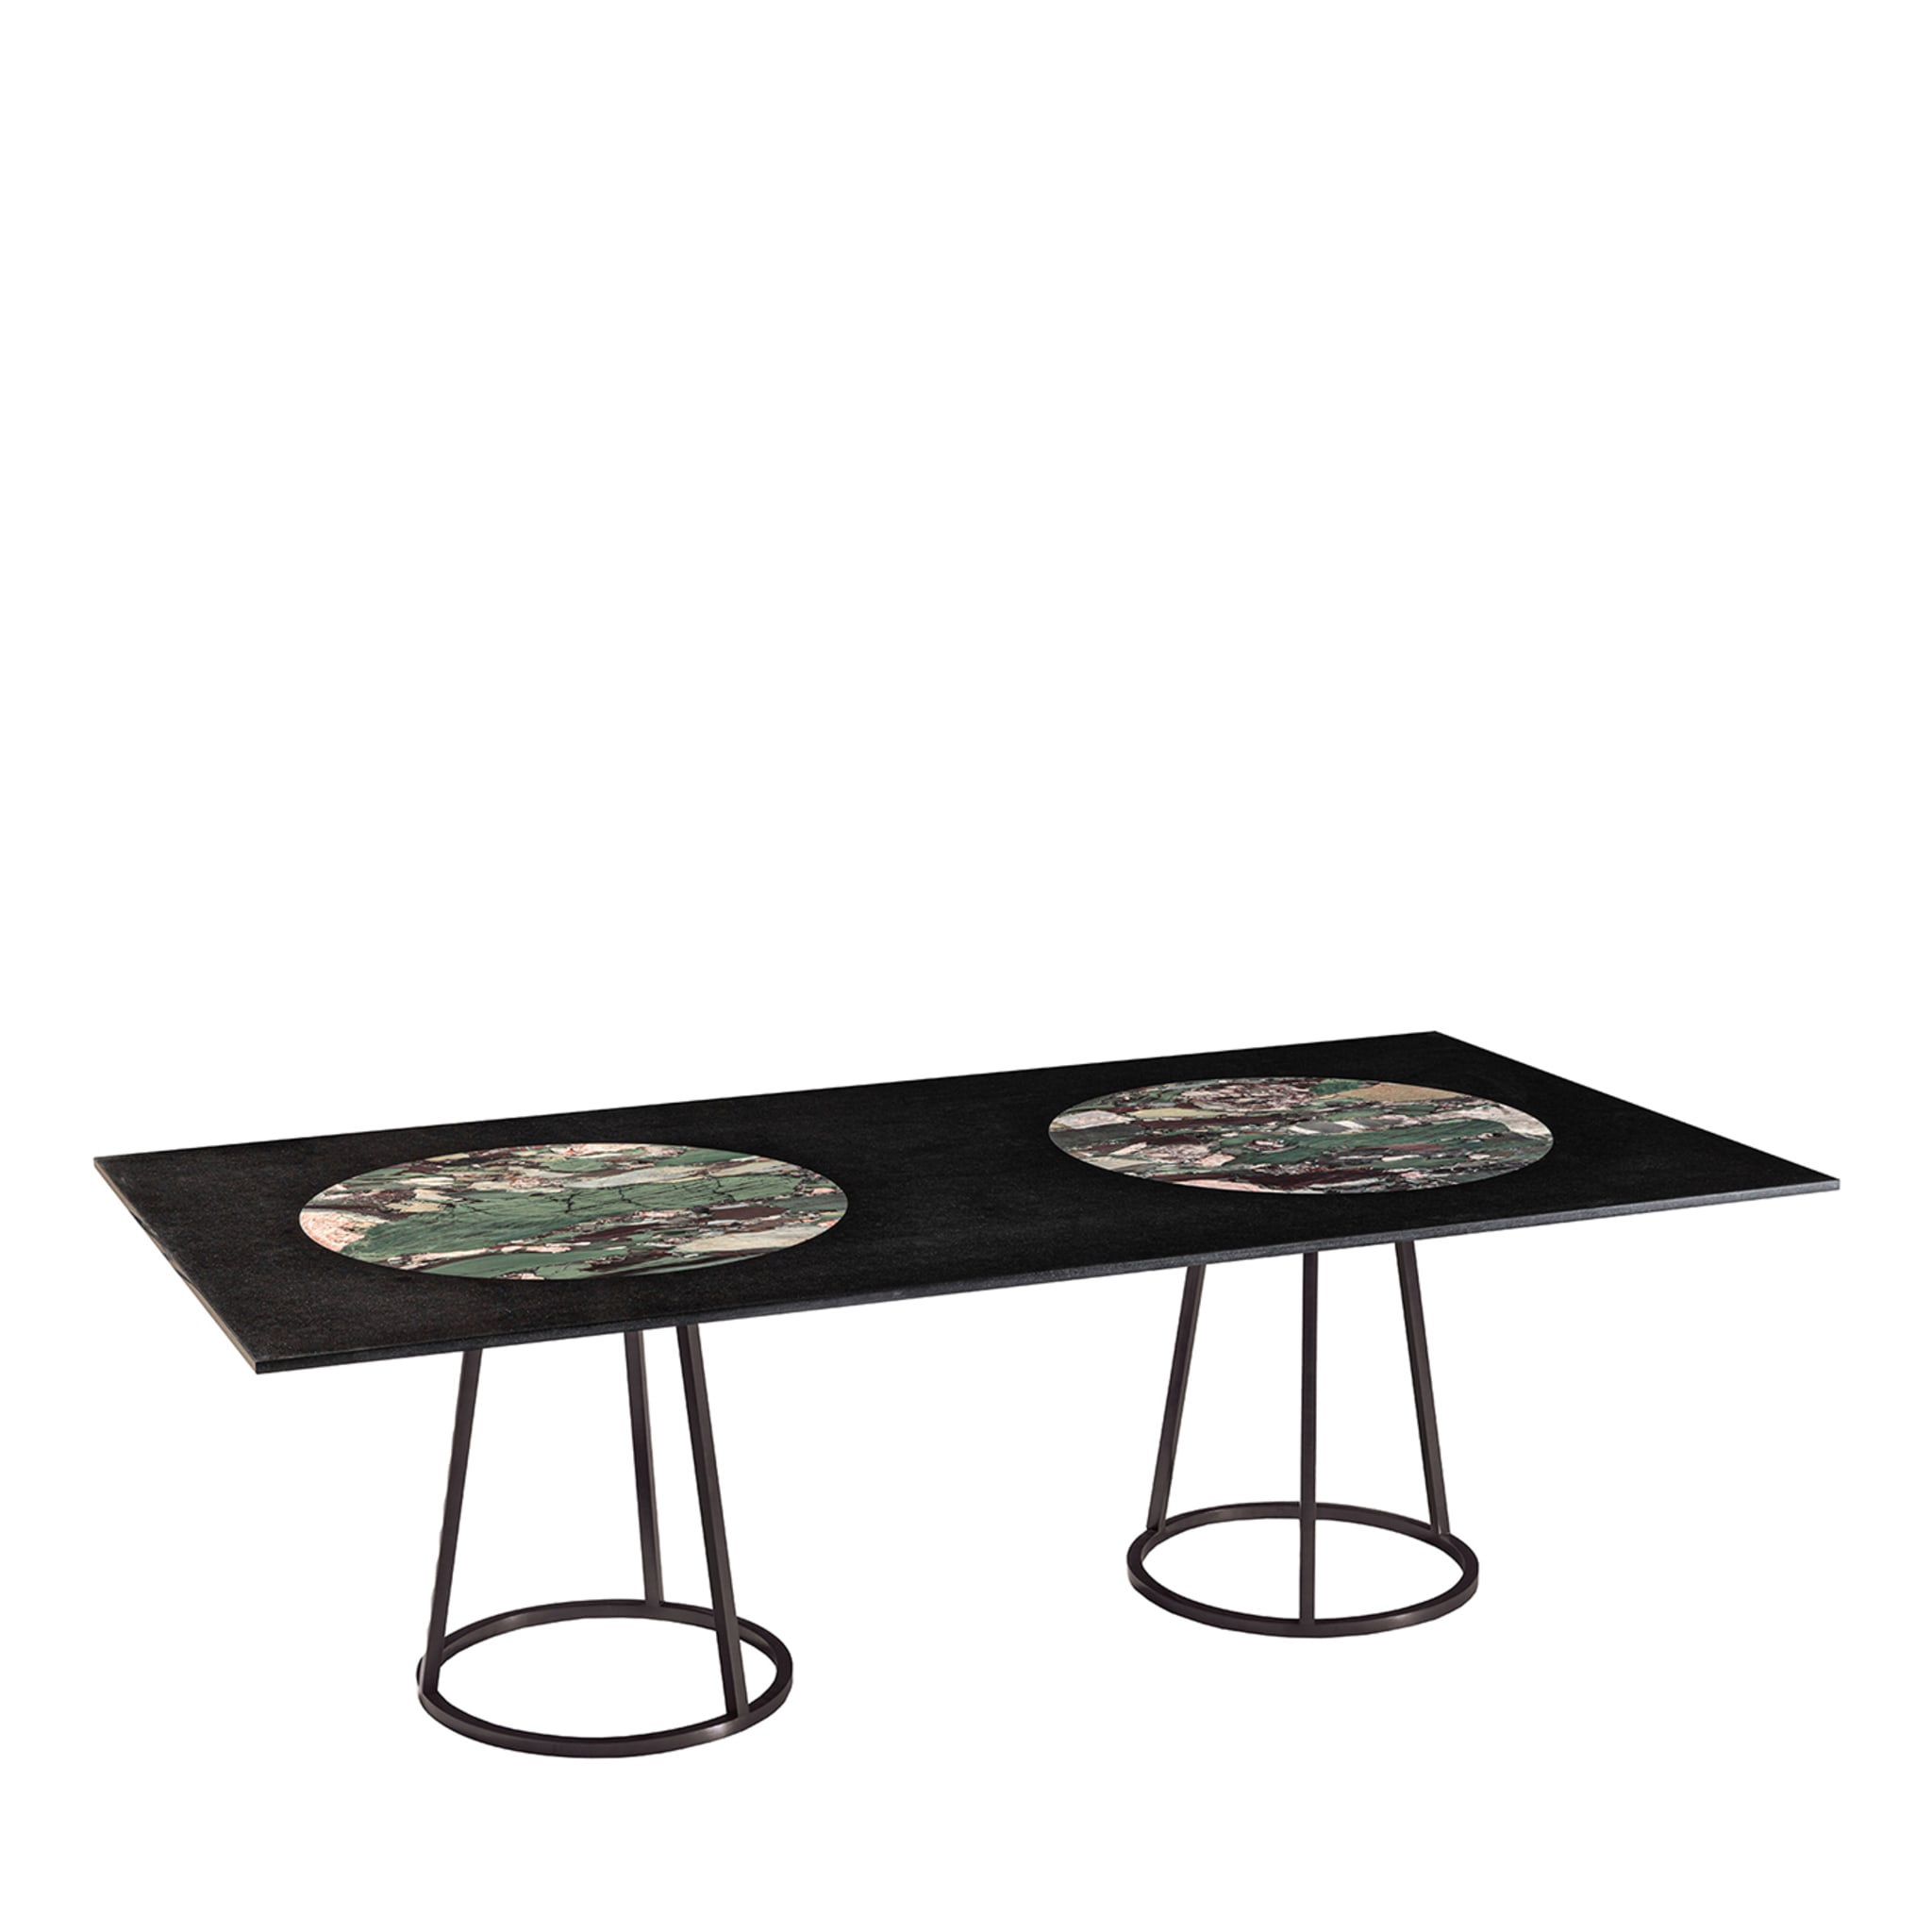 Pantheon Rectangular Black Table by Maarten De Ceulaer - Main view